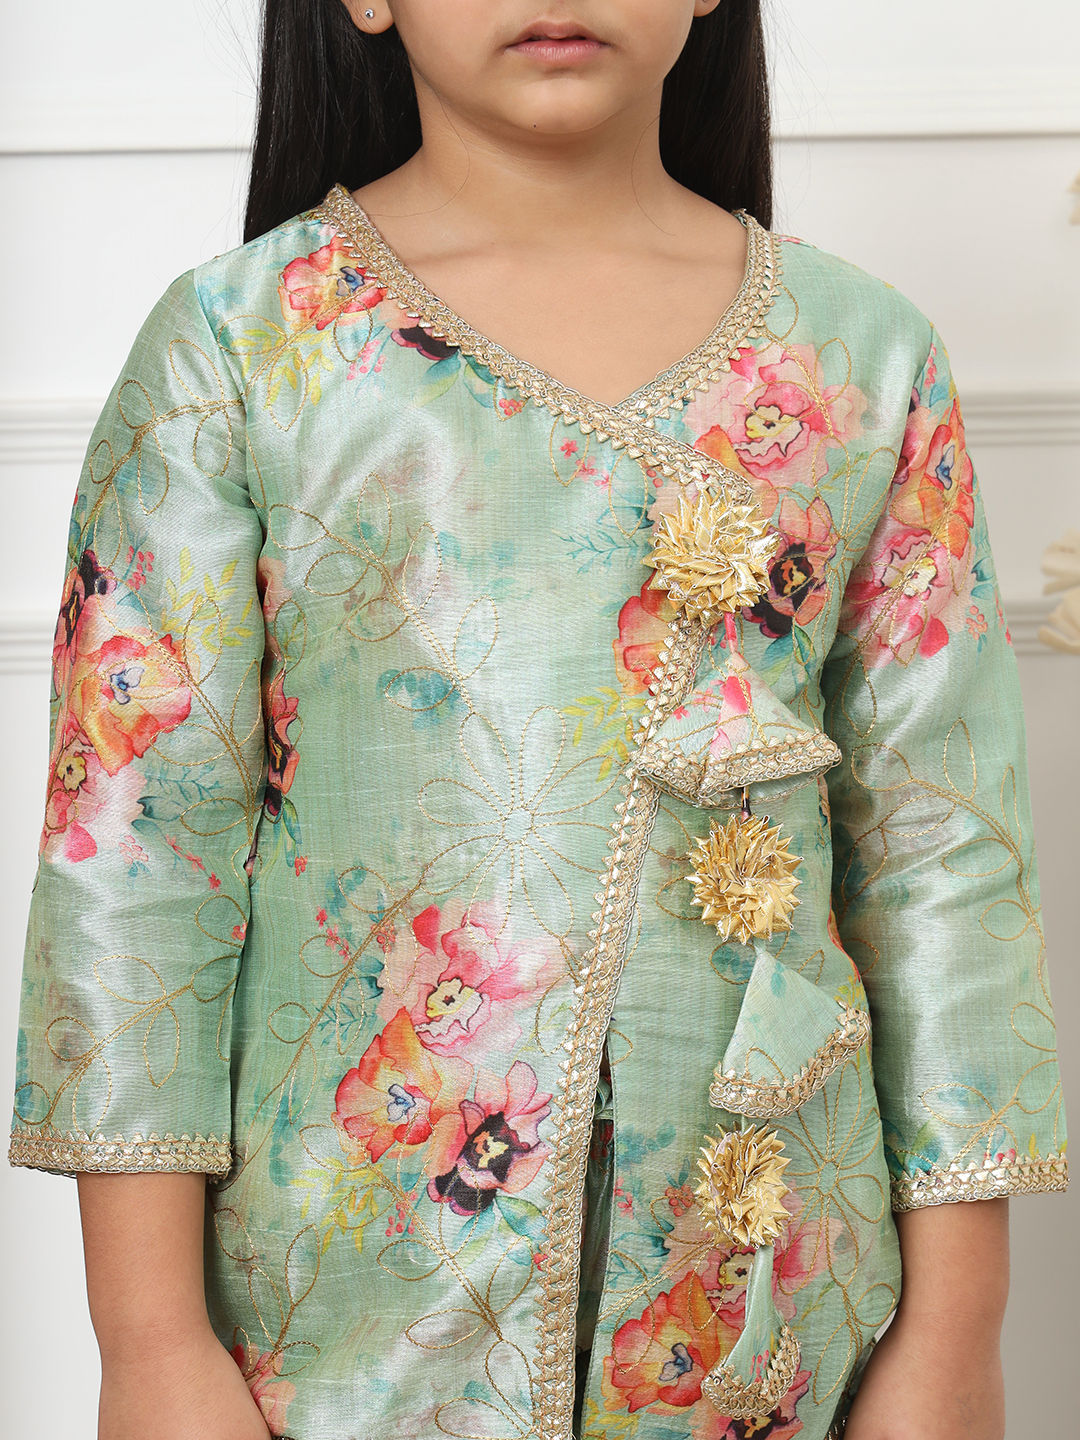 A Line Style Art Silk Fabric Sea Green Color Kurti With Sharara